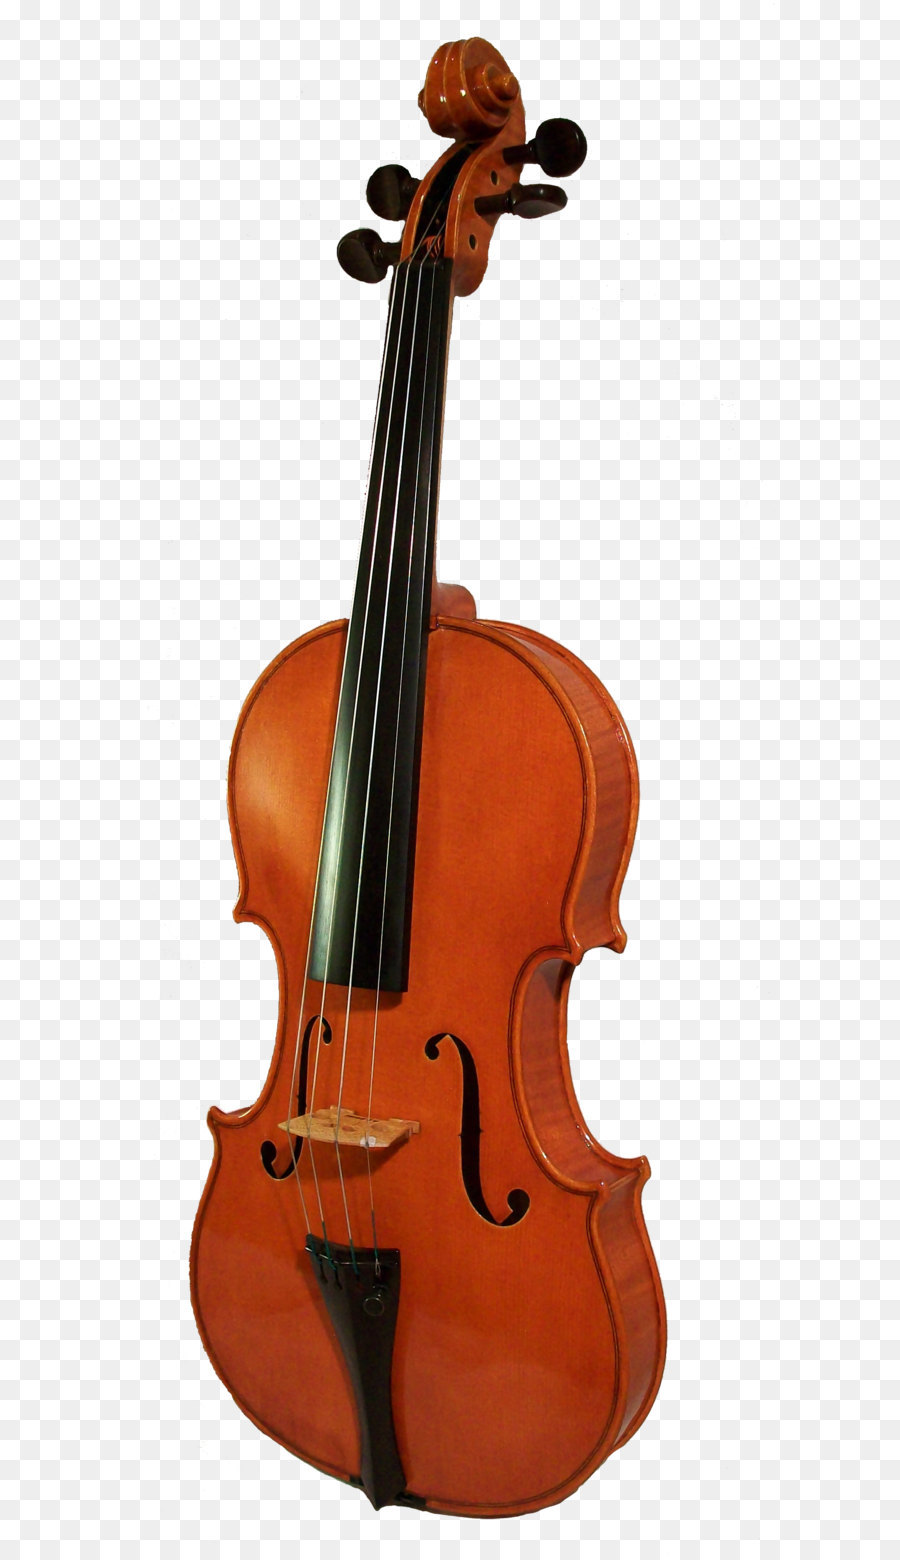 Violin Cello Musical instrument - Violin PNG png download - 1451*3467 - Free Transparent Violin png Download.